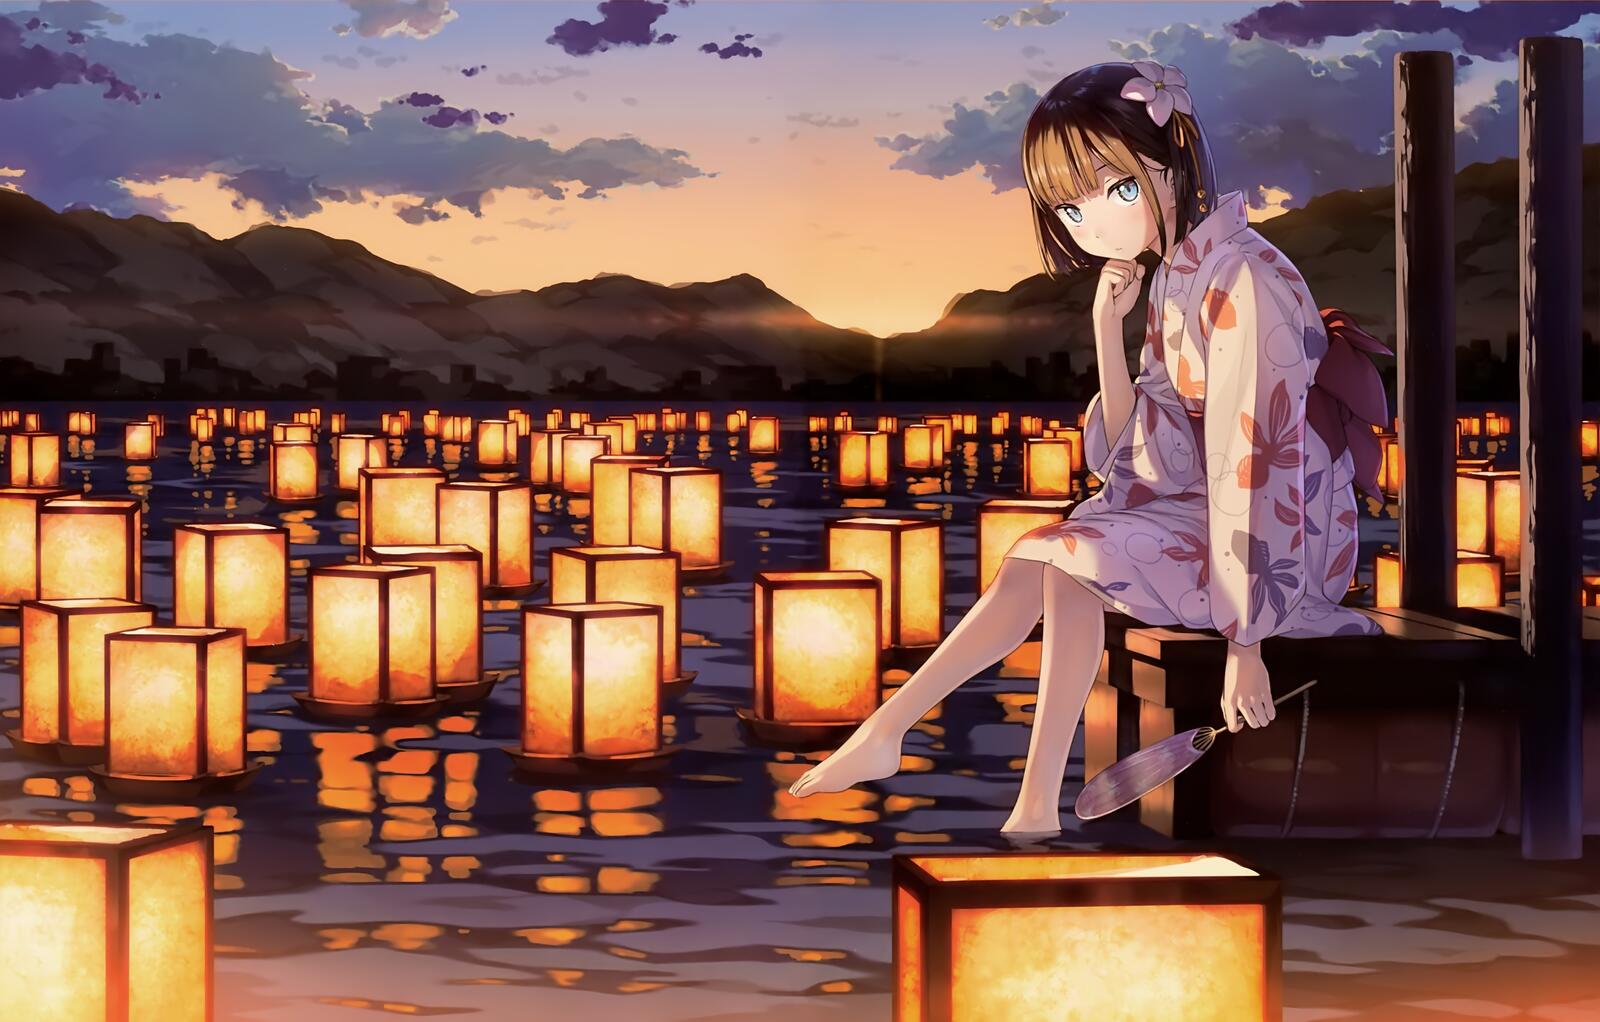 Wallpapers anime girl kantoku lanterns on the desktop